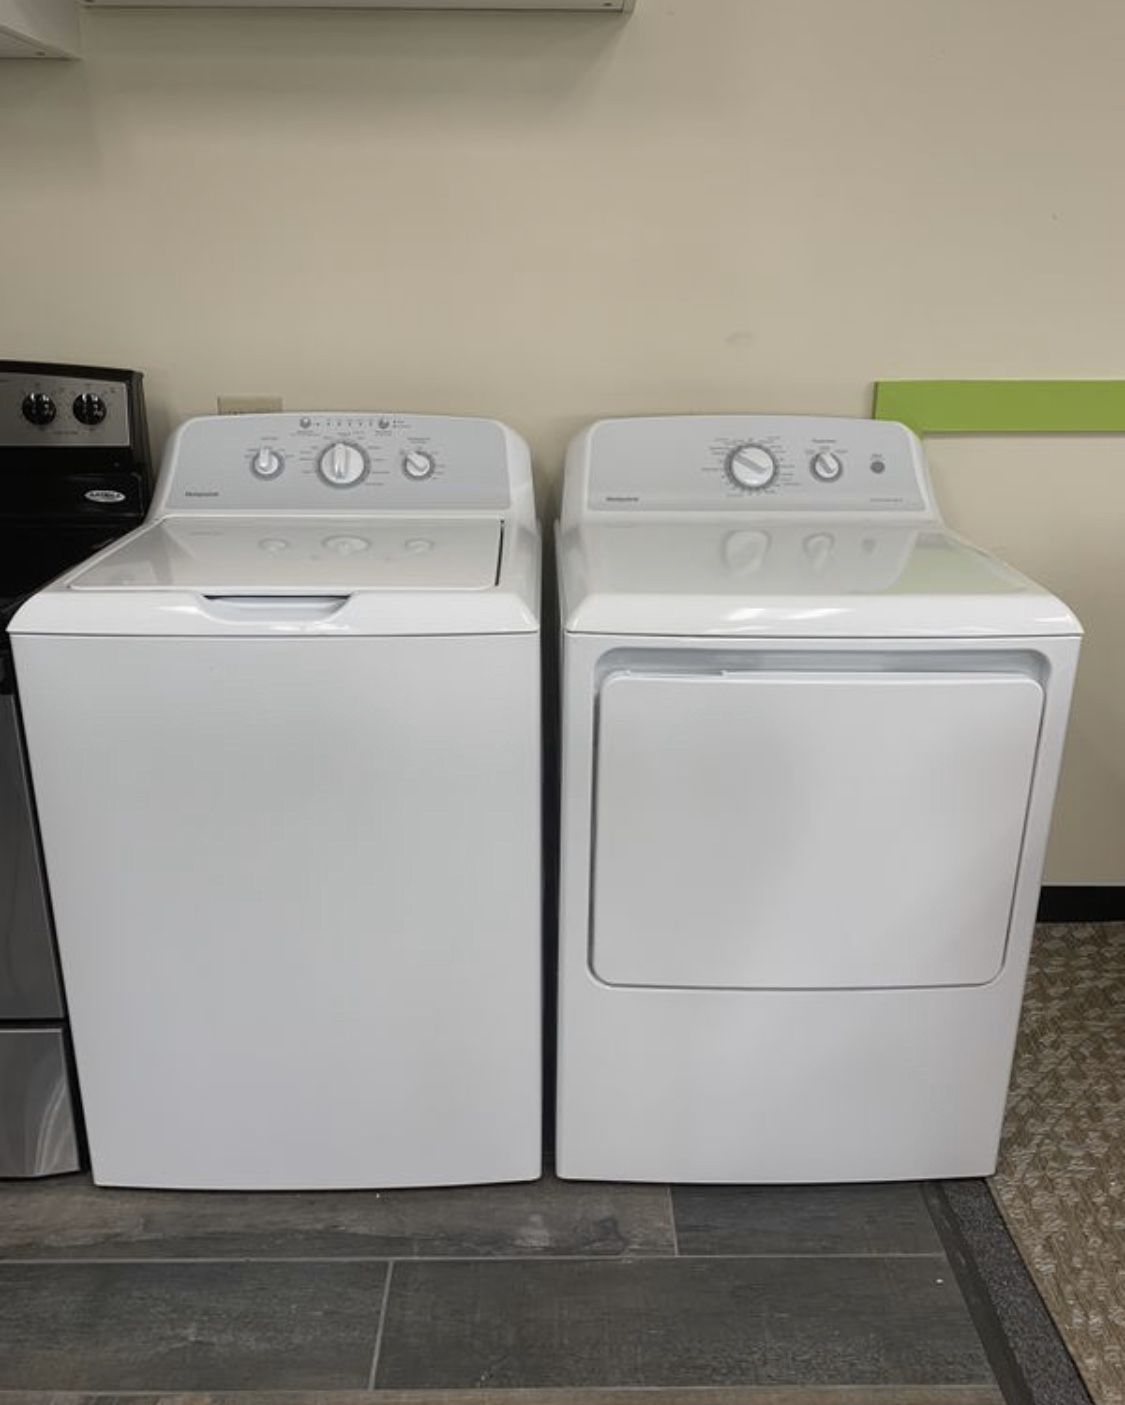 Brand new GE washer dryer set